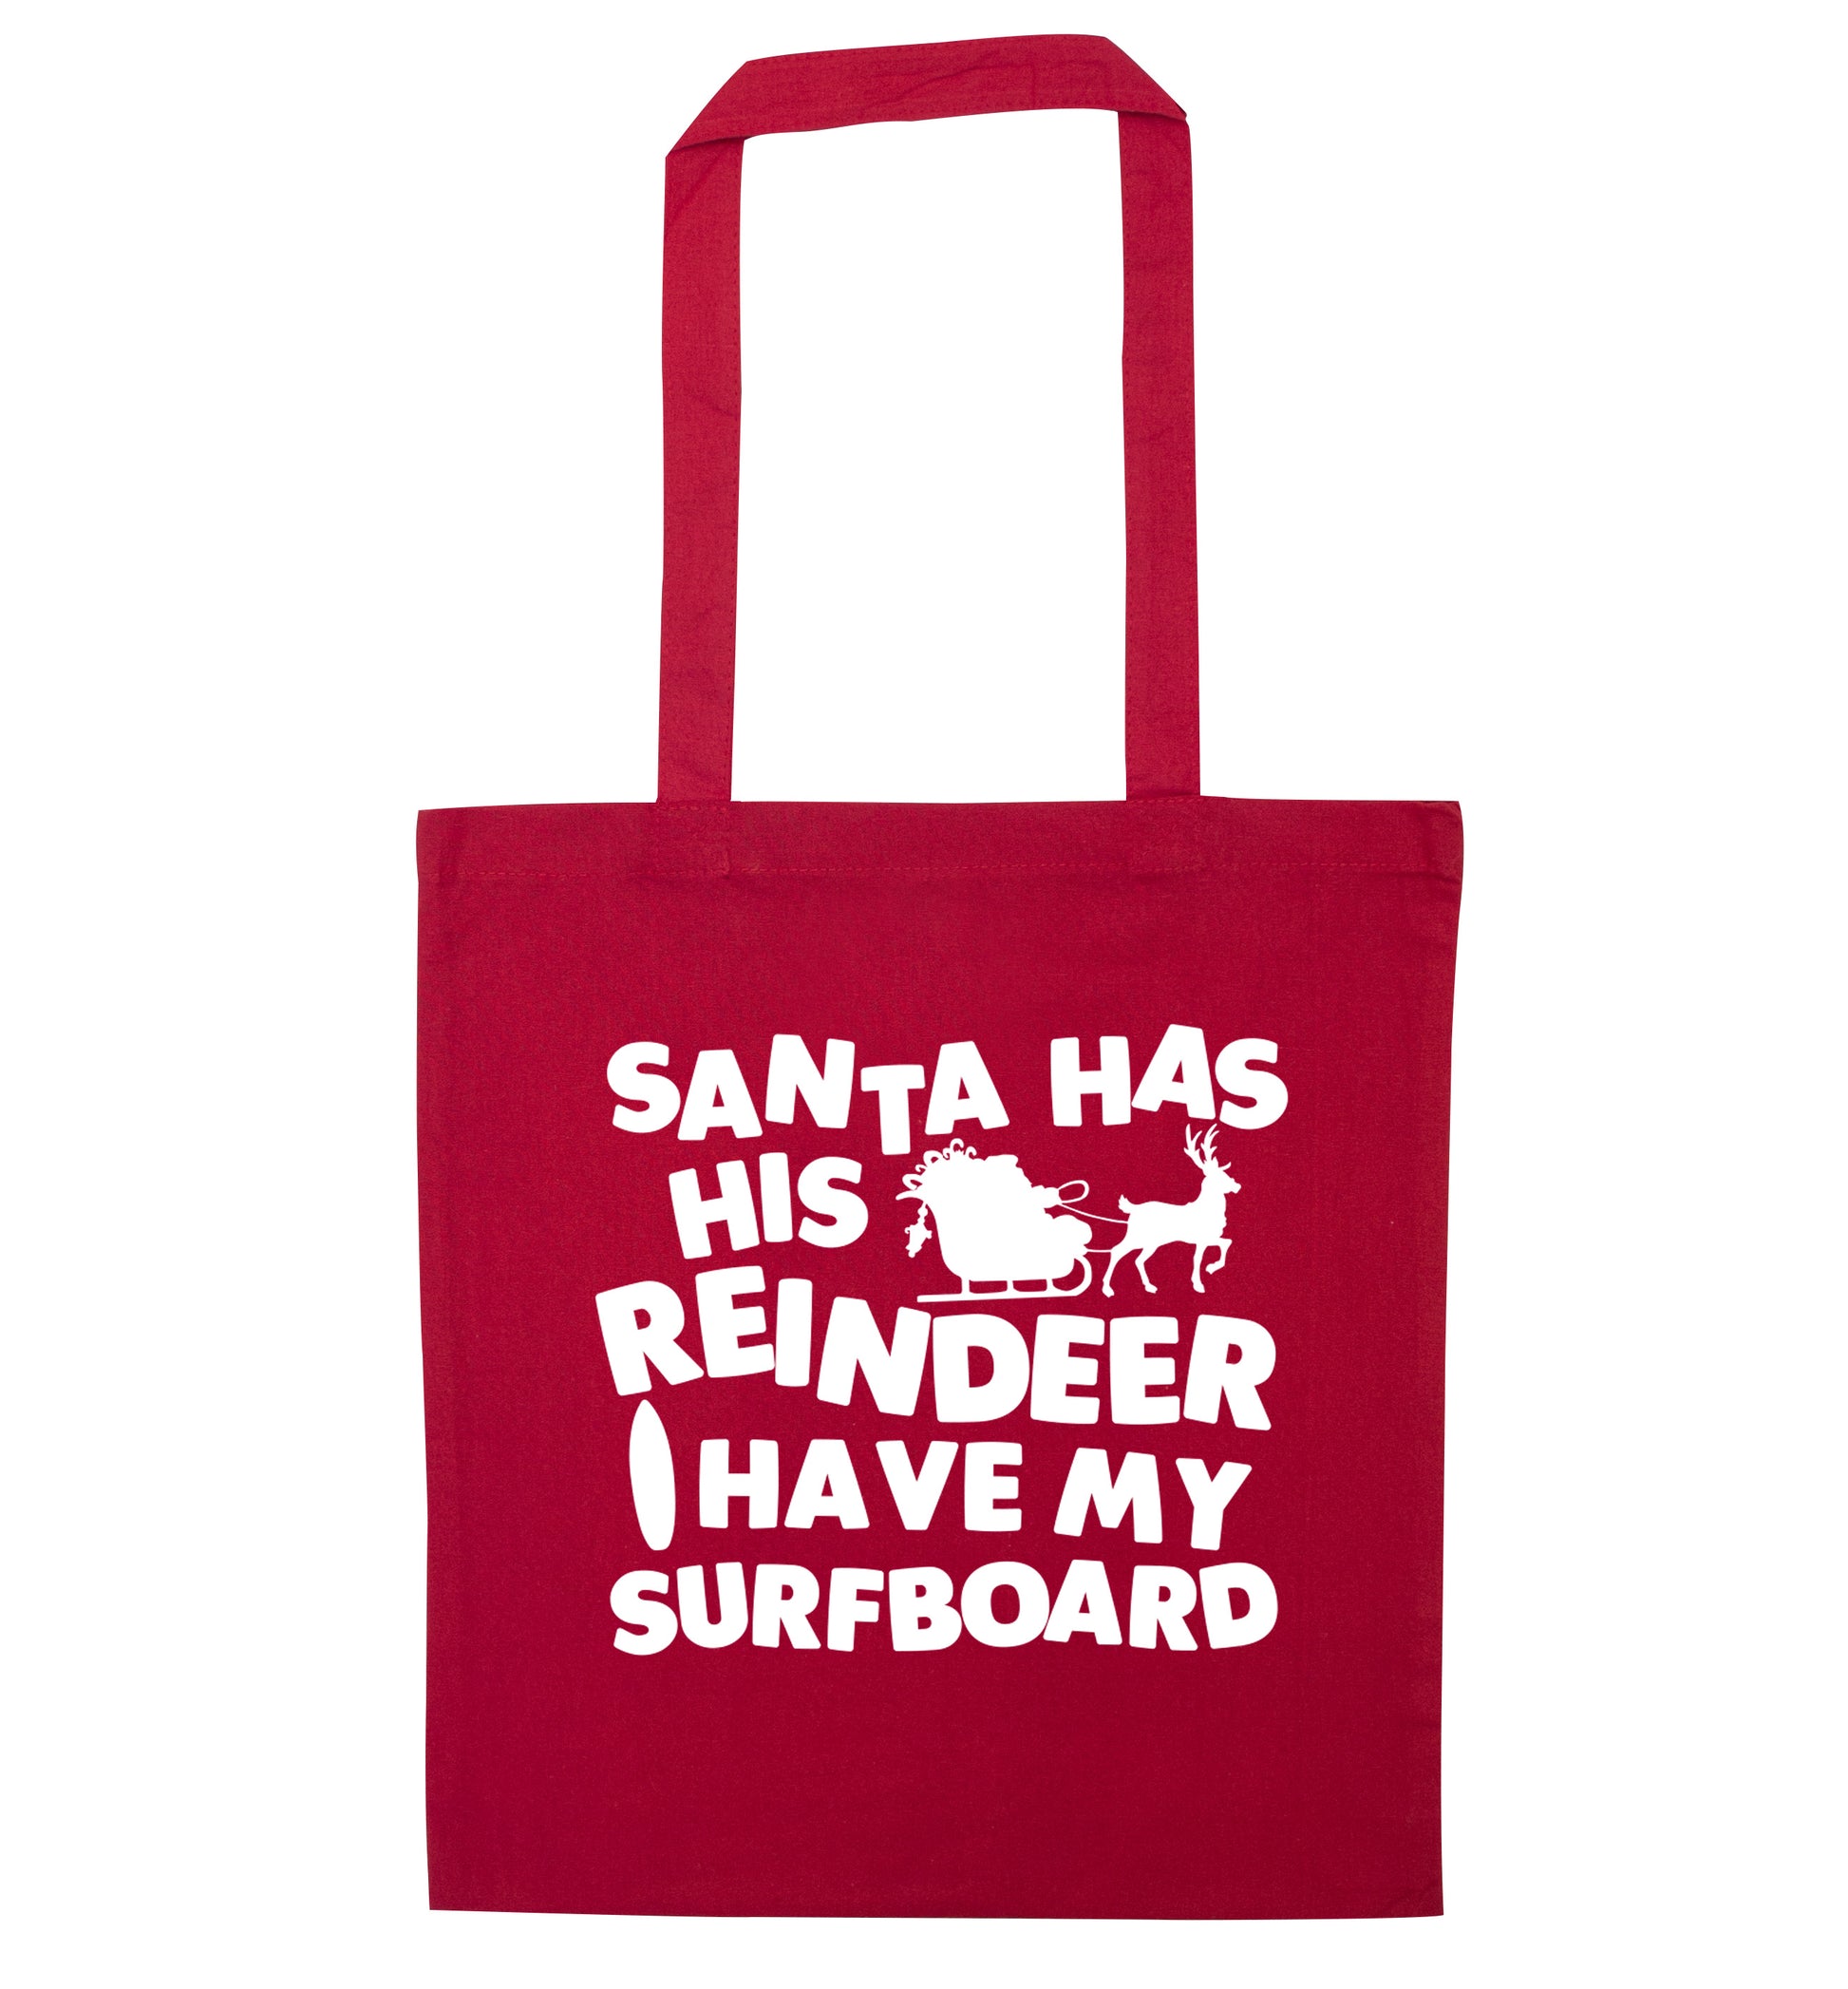 Santa has his reindeer I have my surfboard red tote bag